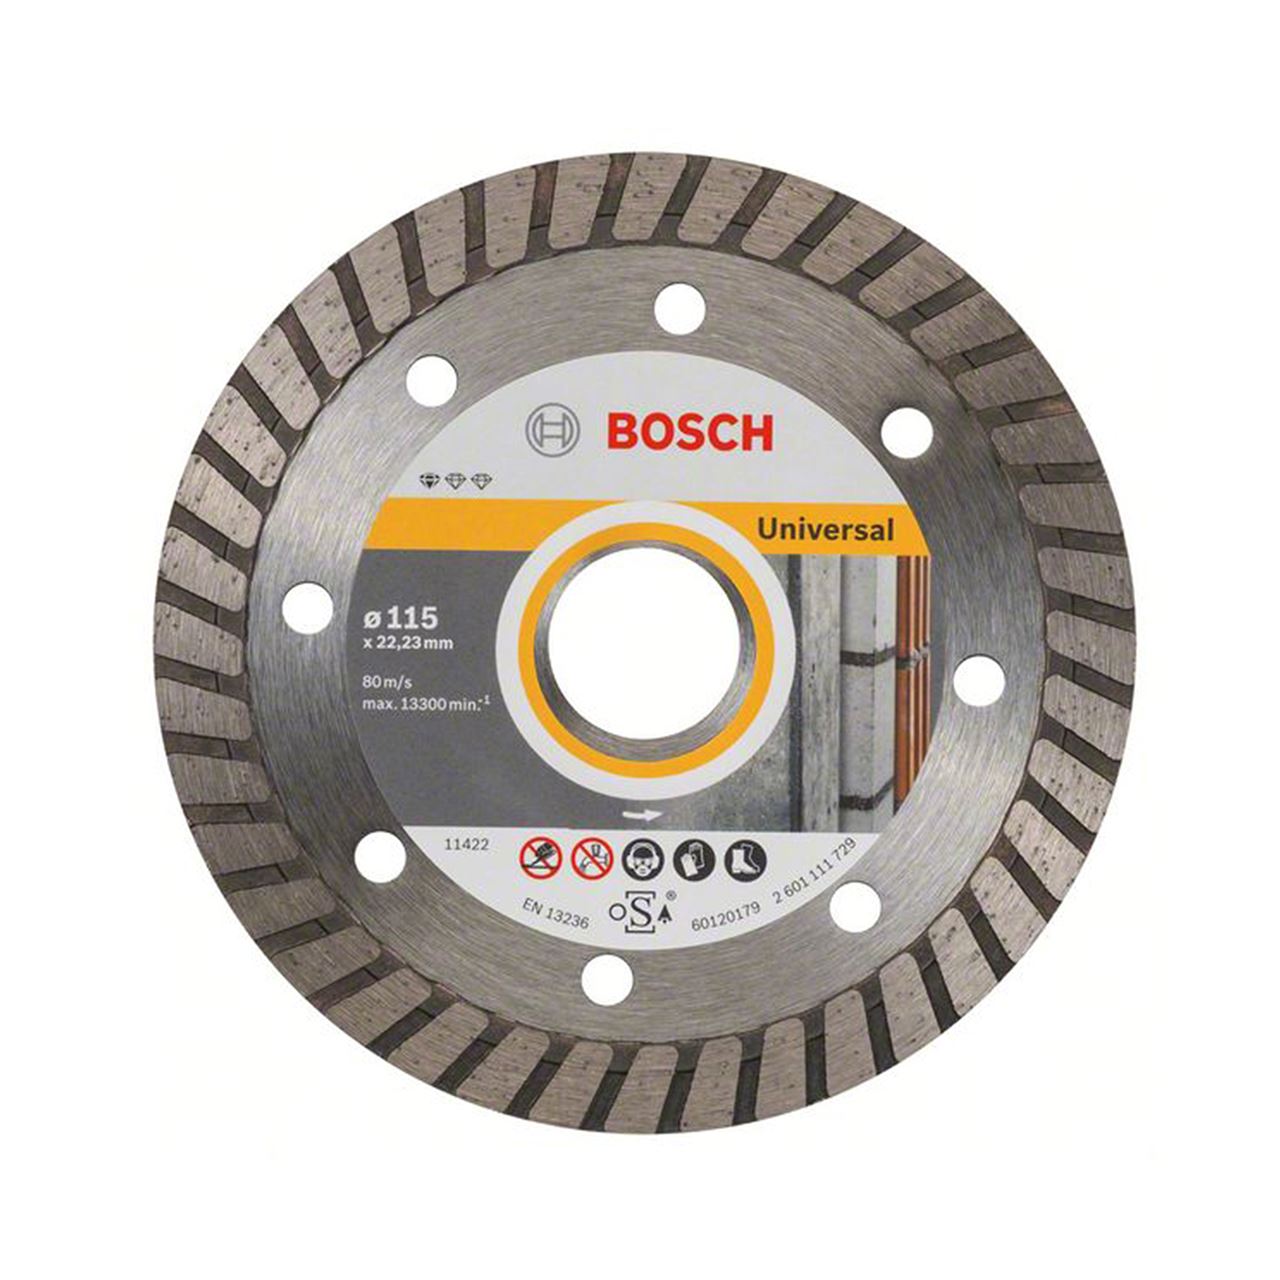 Disco diamante Bosch Eco-2 banda continua 115 mm - Suministros Urquiza